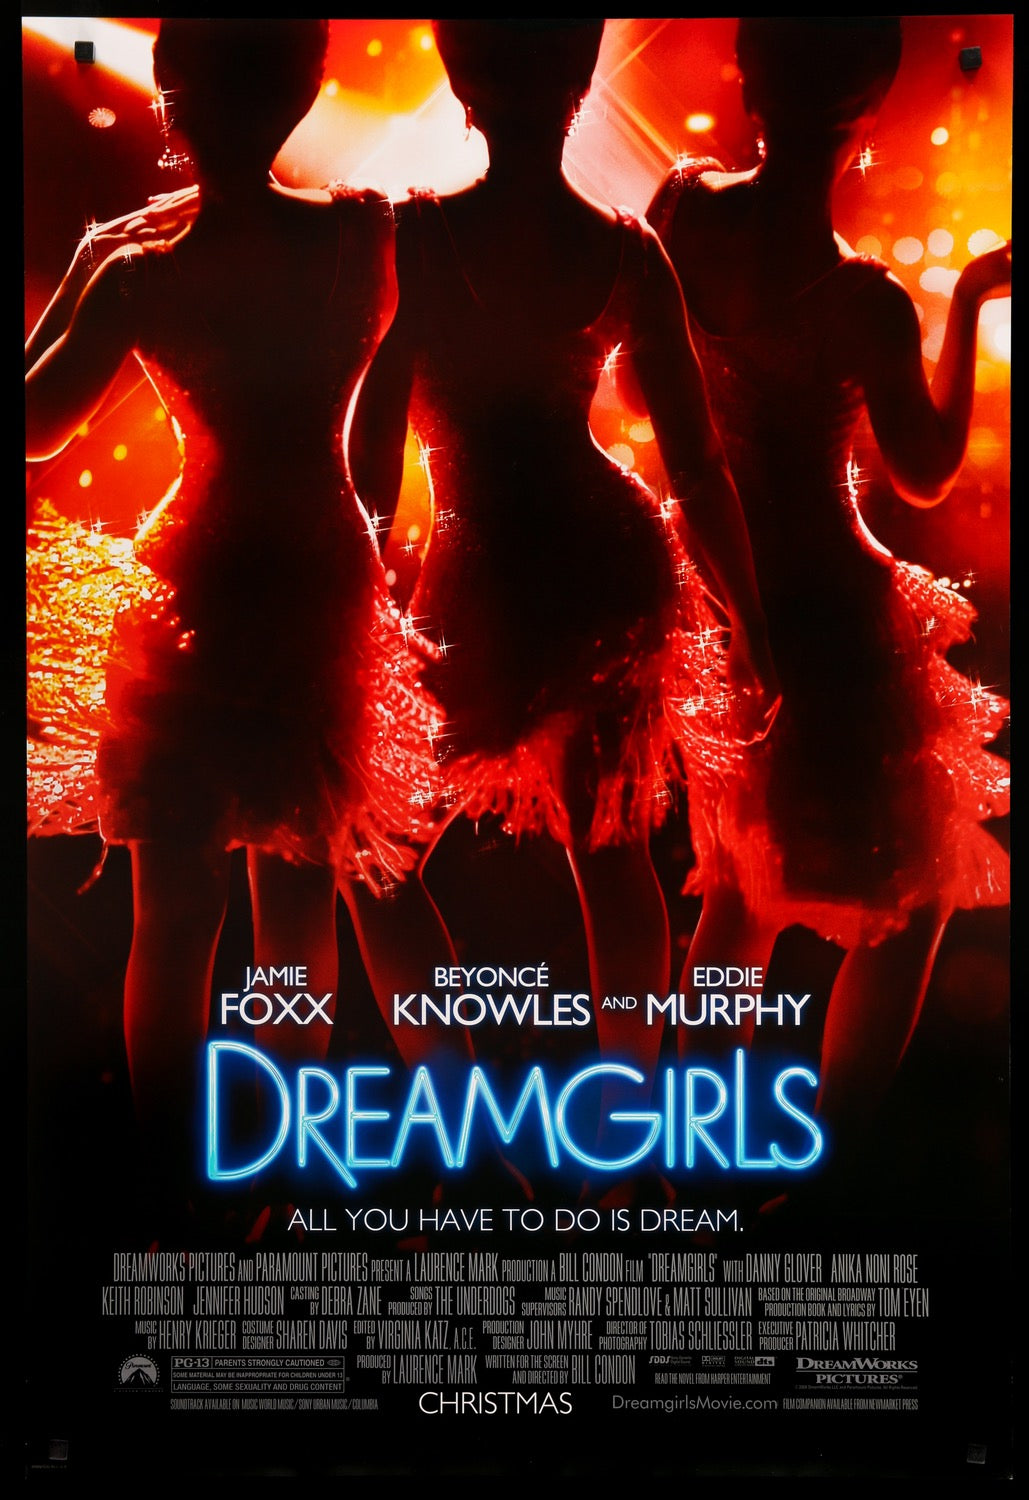 Dreamgirls (2006) original movie poster for sale at Original Film Art